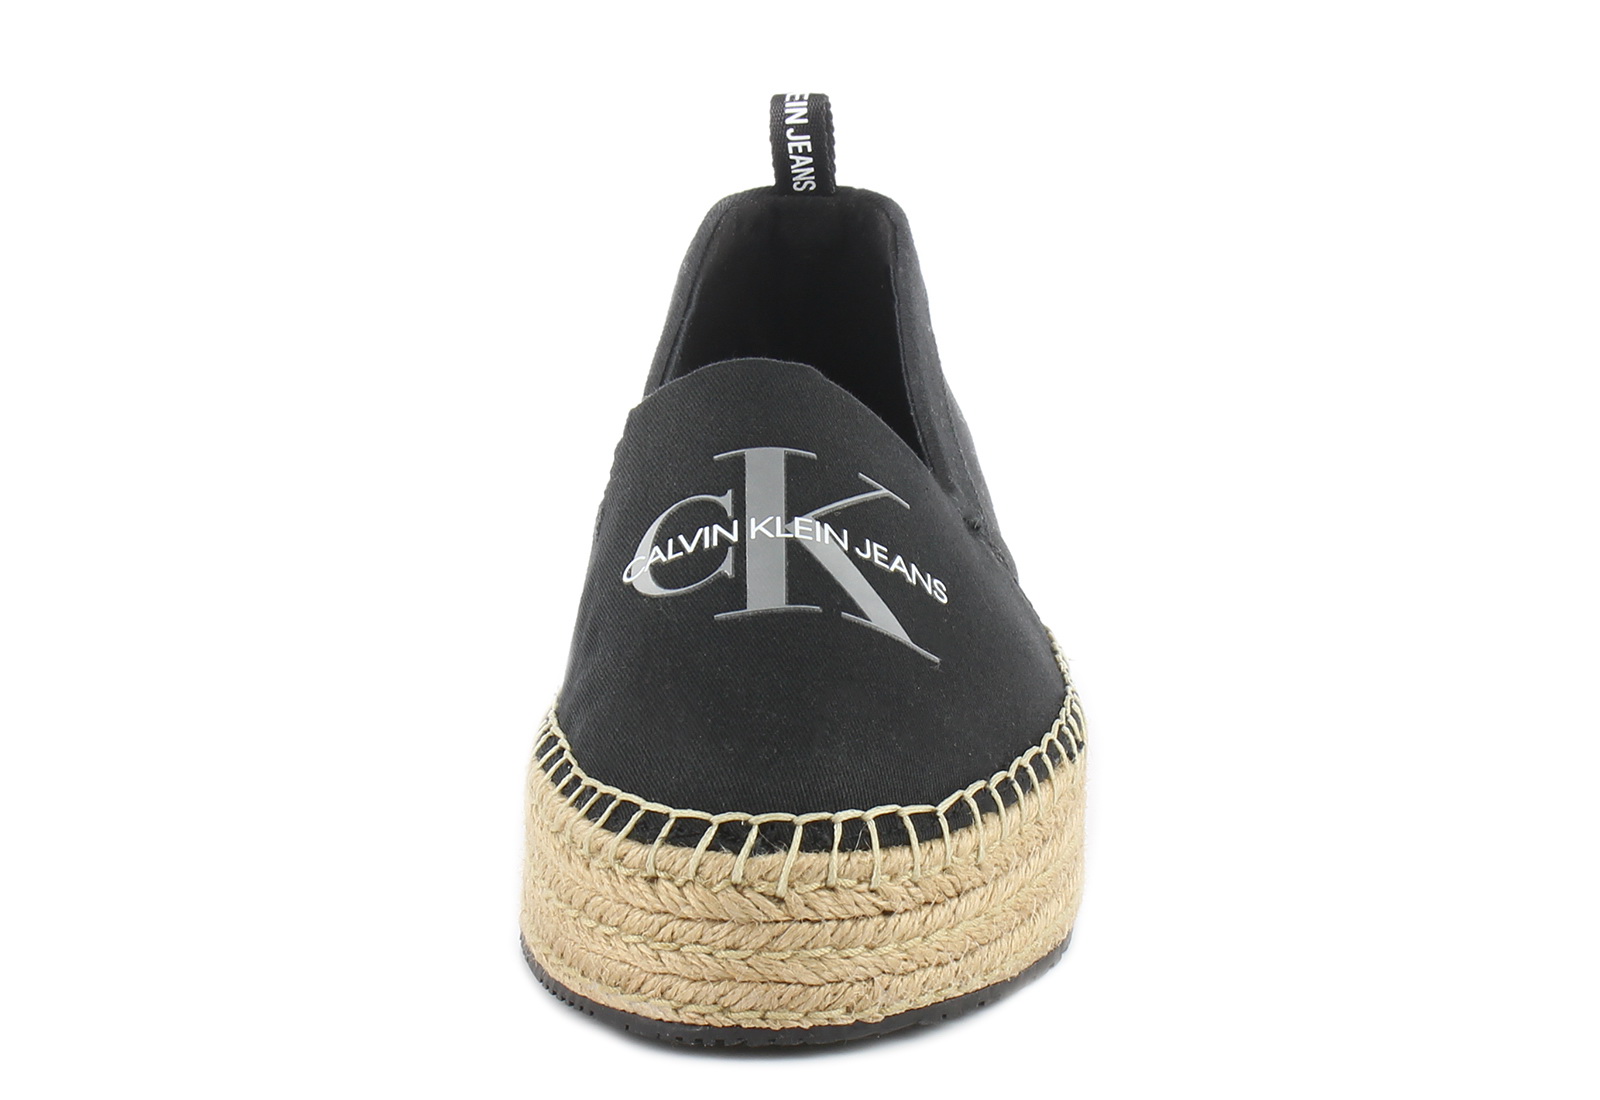 Calvin Klein Espadrilles - Elsa - YW00037-BDS - Online shop sneakers, shoes and boots